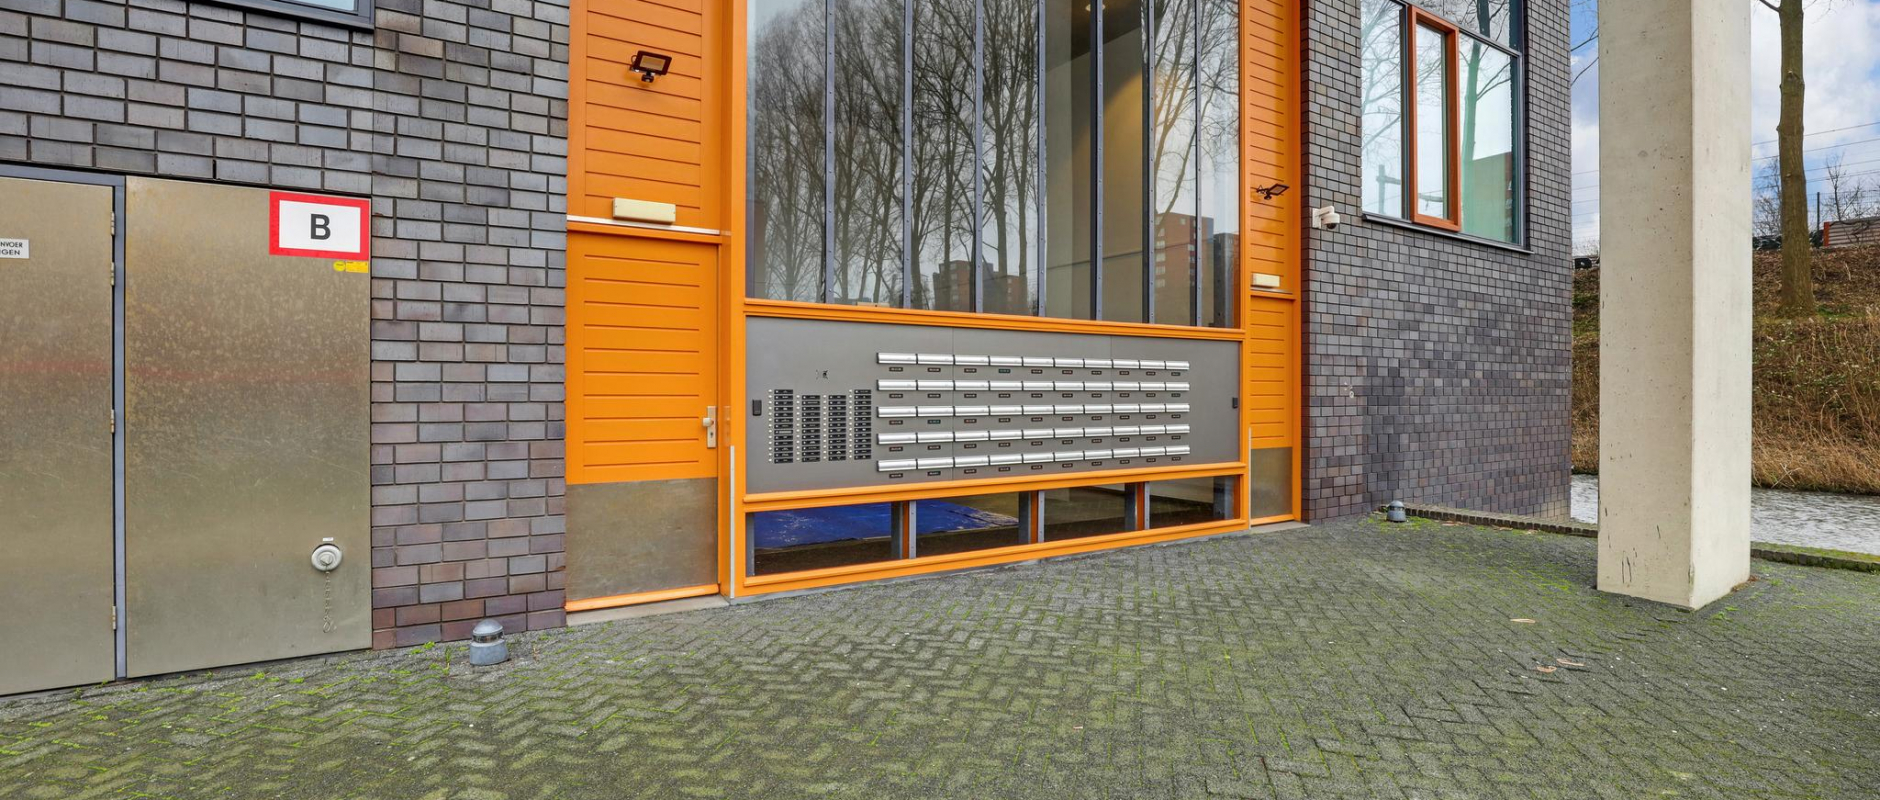 Woning te koop aan de Jacques Veltmanstraat 29 te Amsterdam